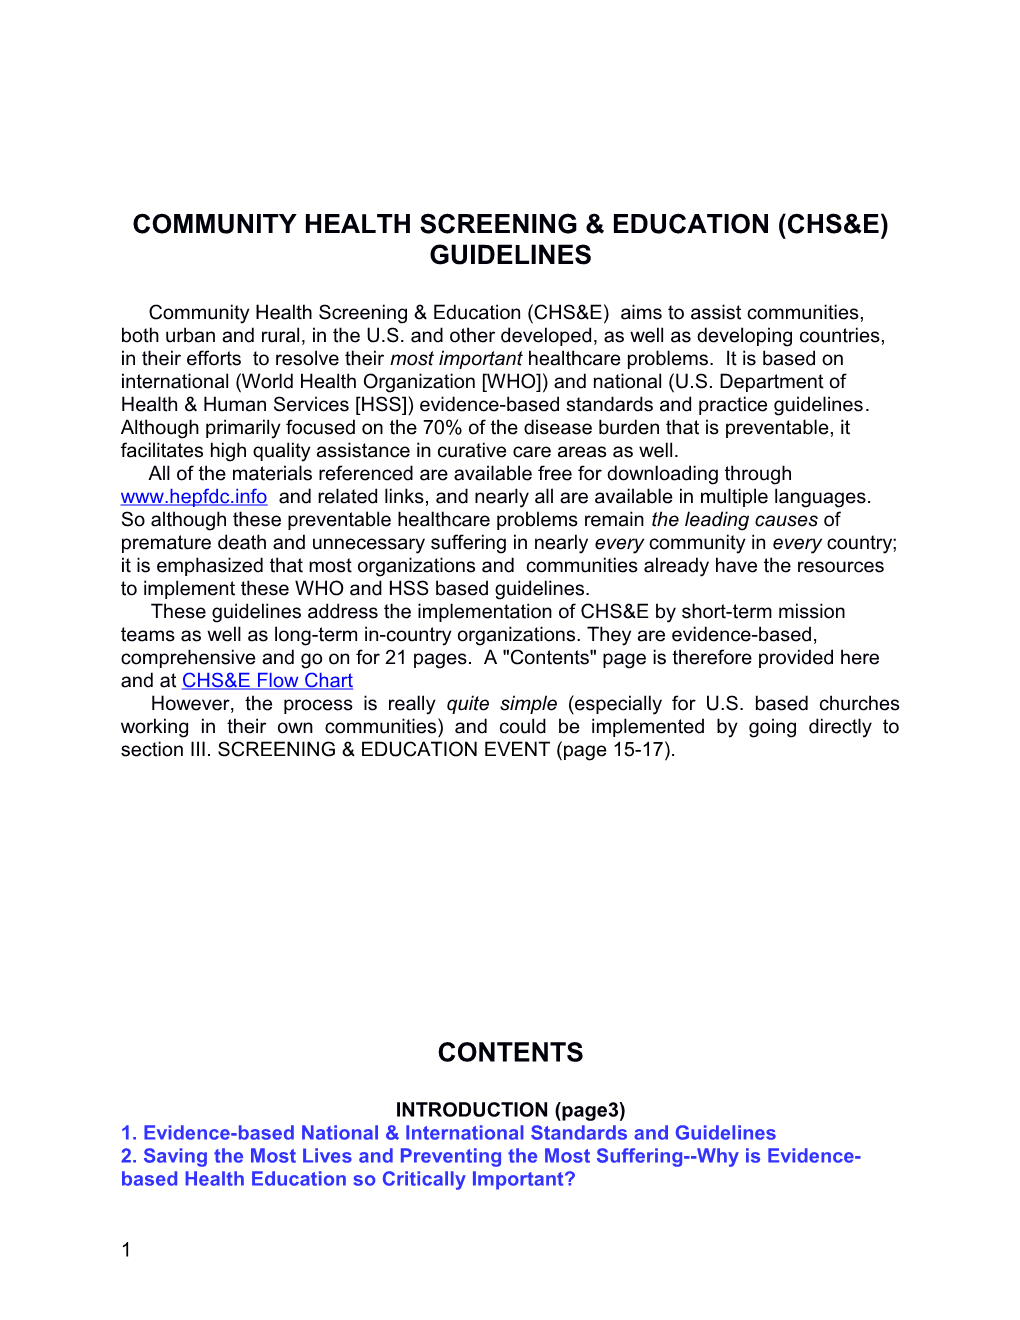 Community Health Screening & Education (Chs&E) Guidelines